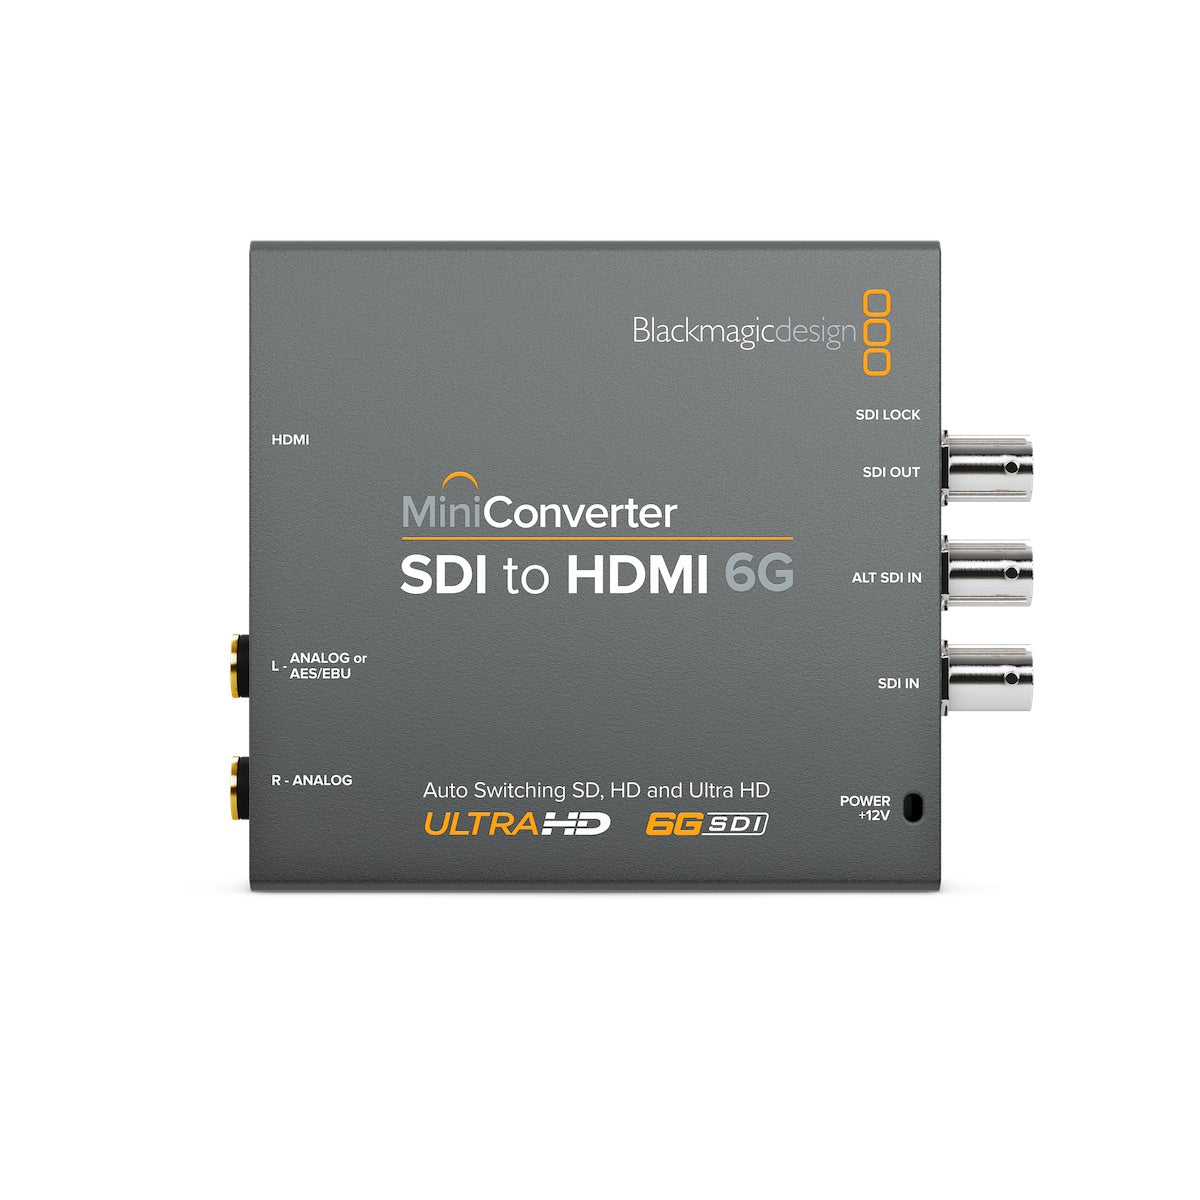 Blackmagic Design Mini Converter SDI to HDMI 6G, front